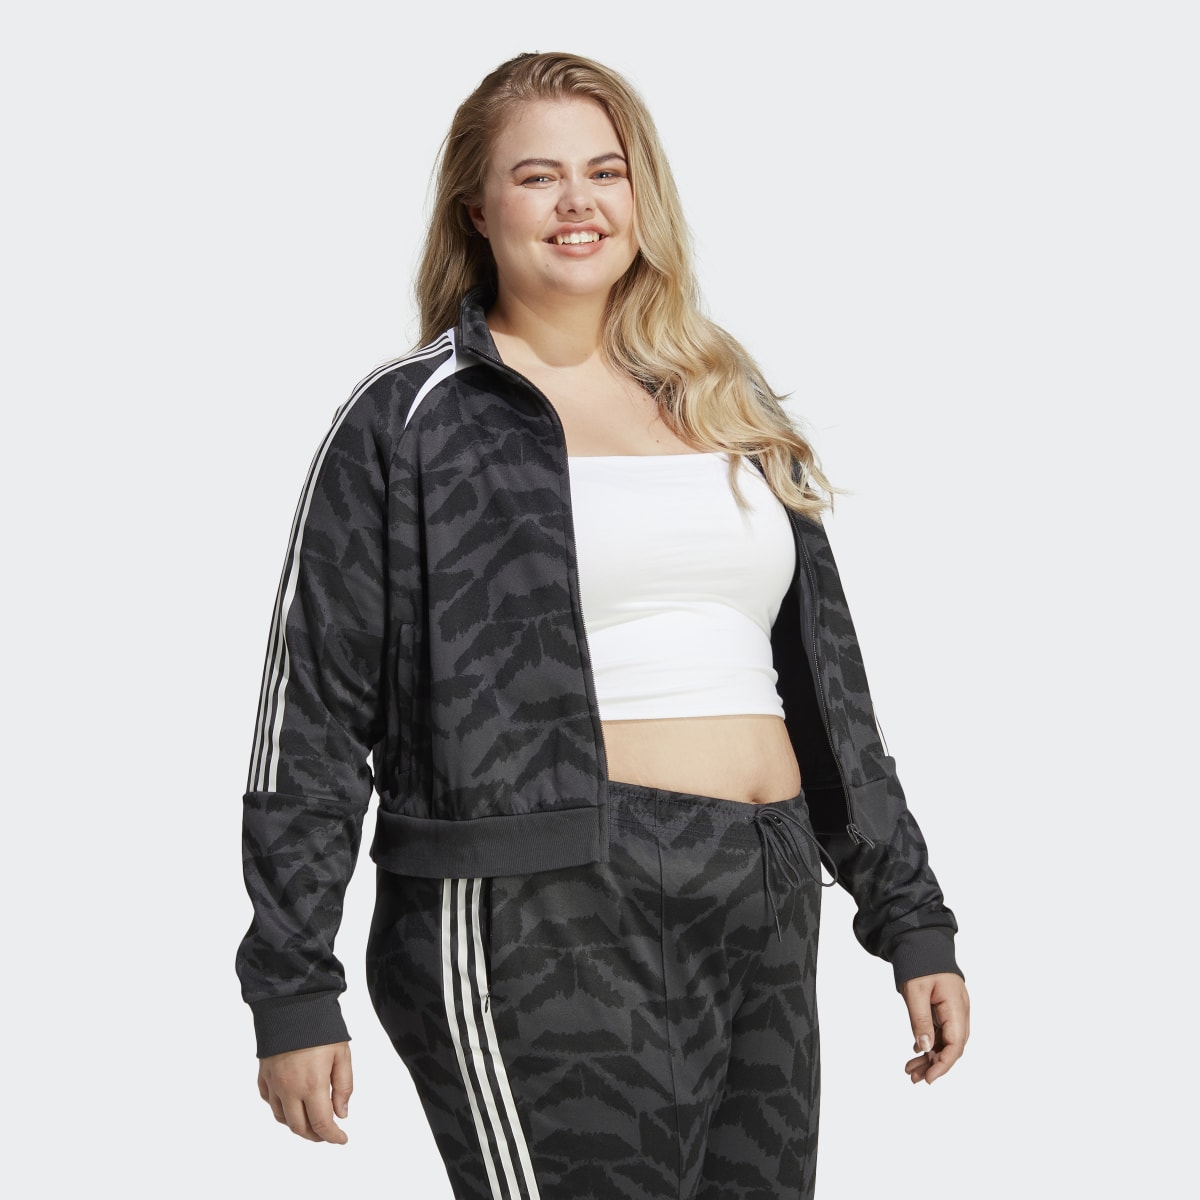 Adidas Tiro Suit Up Lifestyle Trainingsjacke – Große Größen. 4